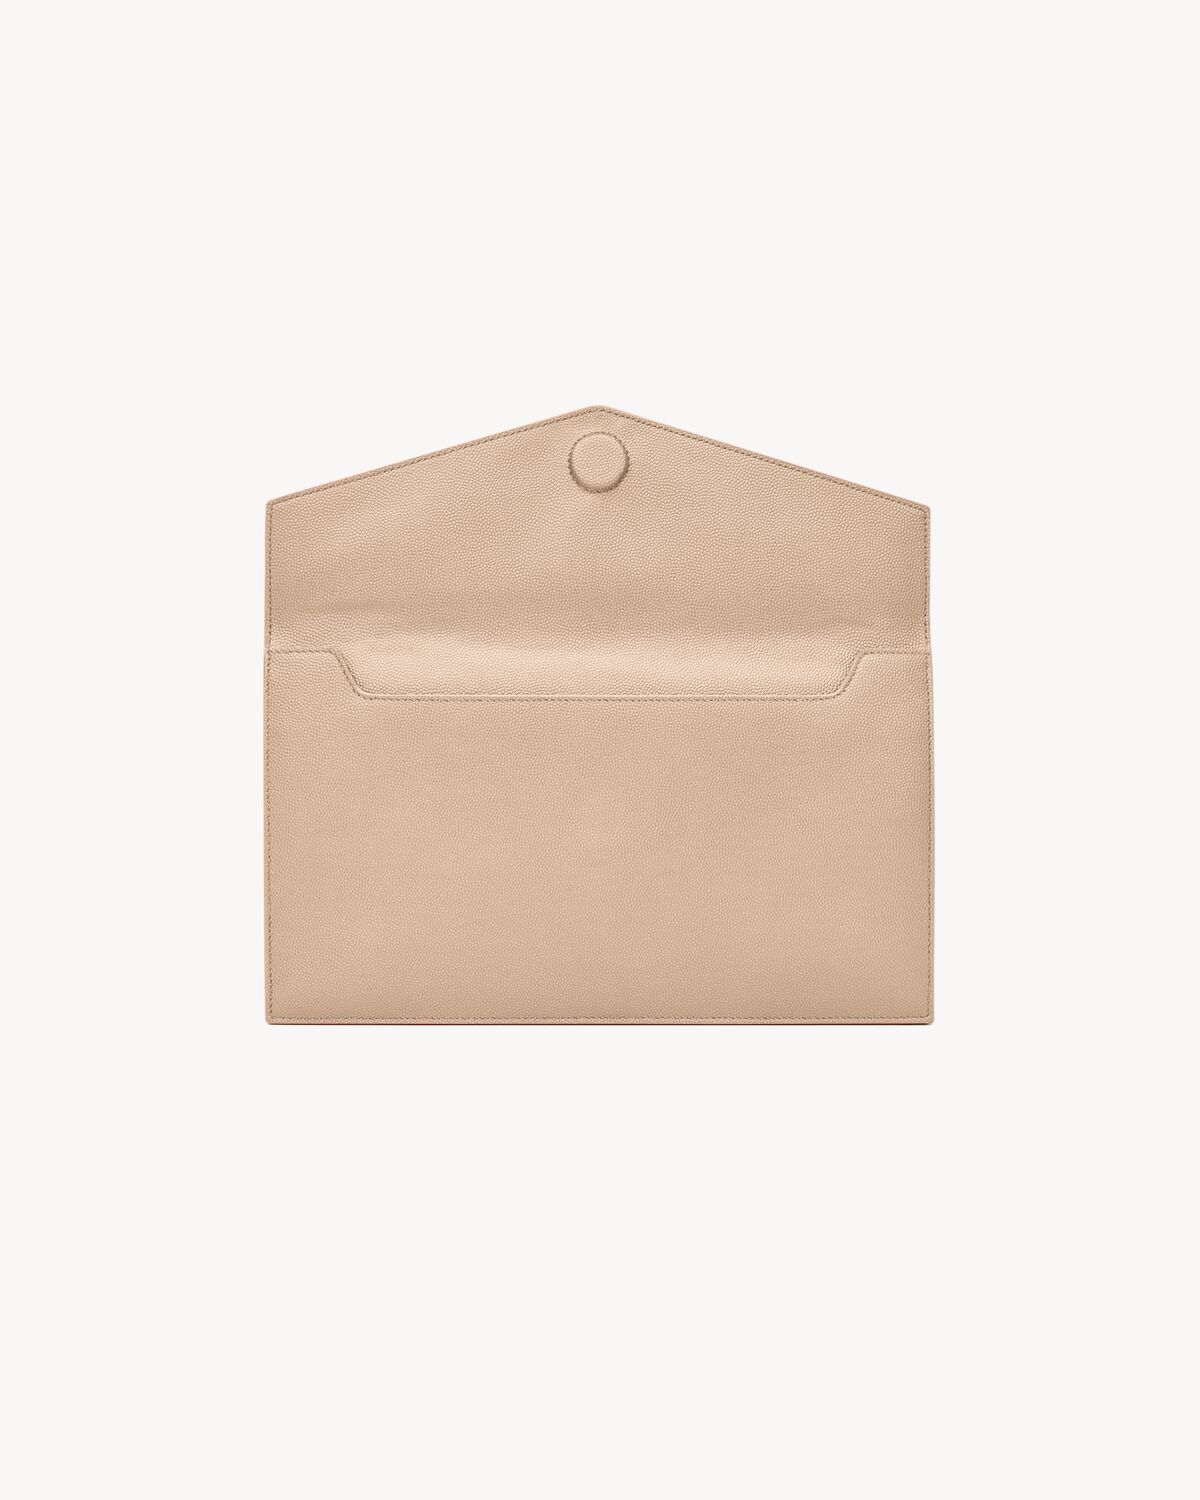 UPTOWN pouch in grain de poudre leather